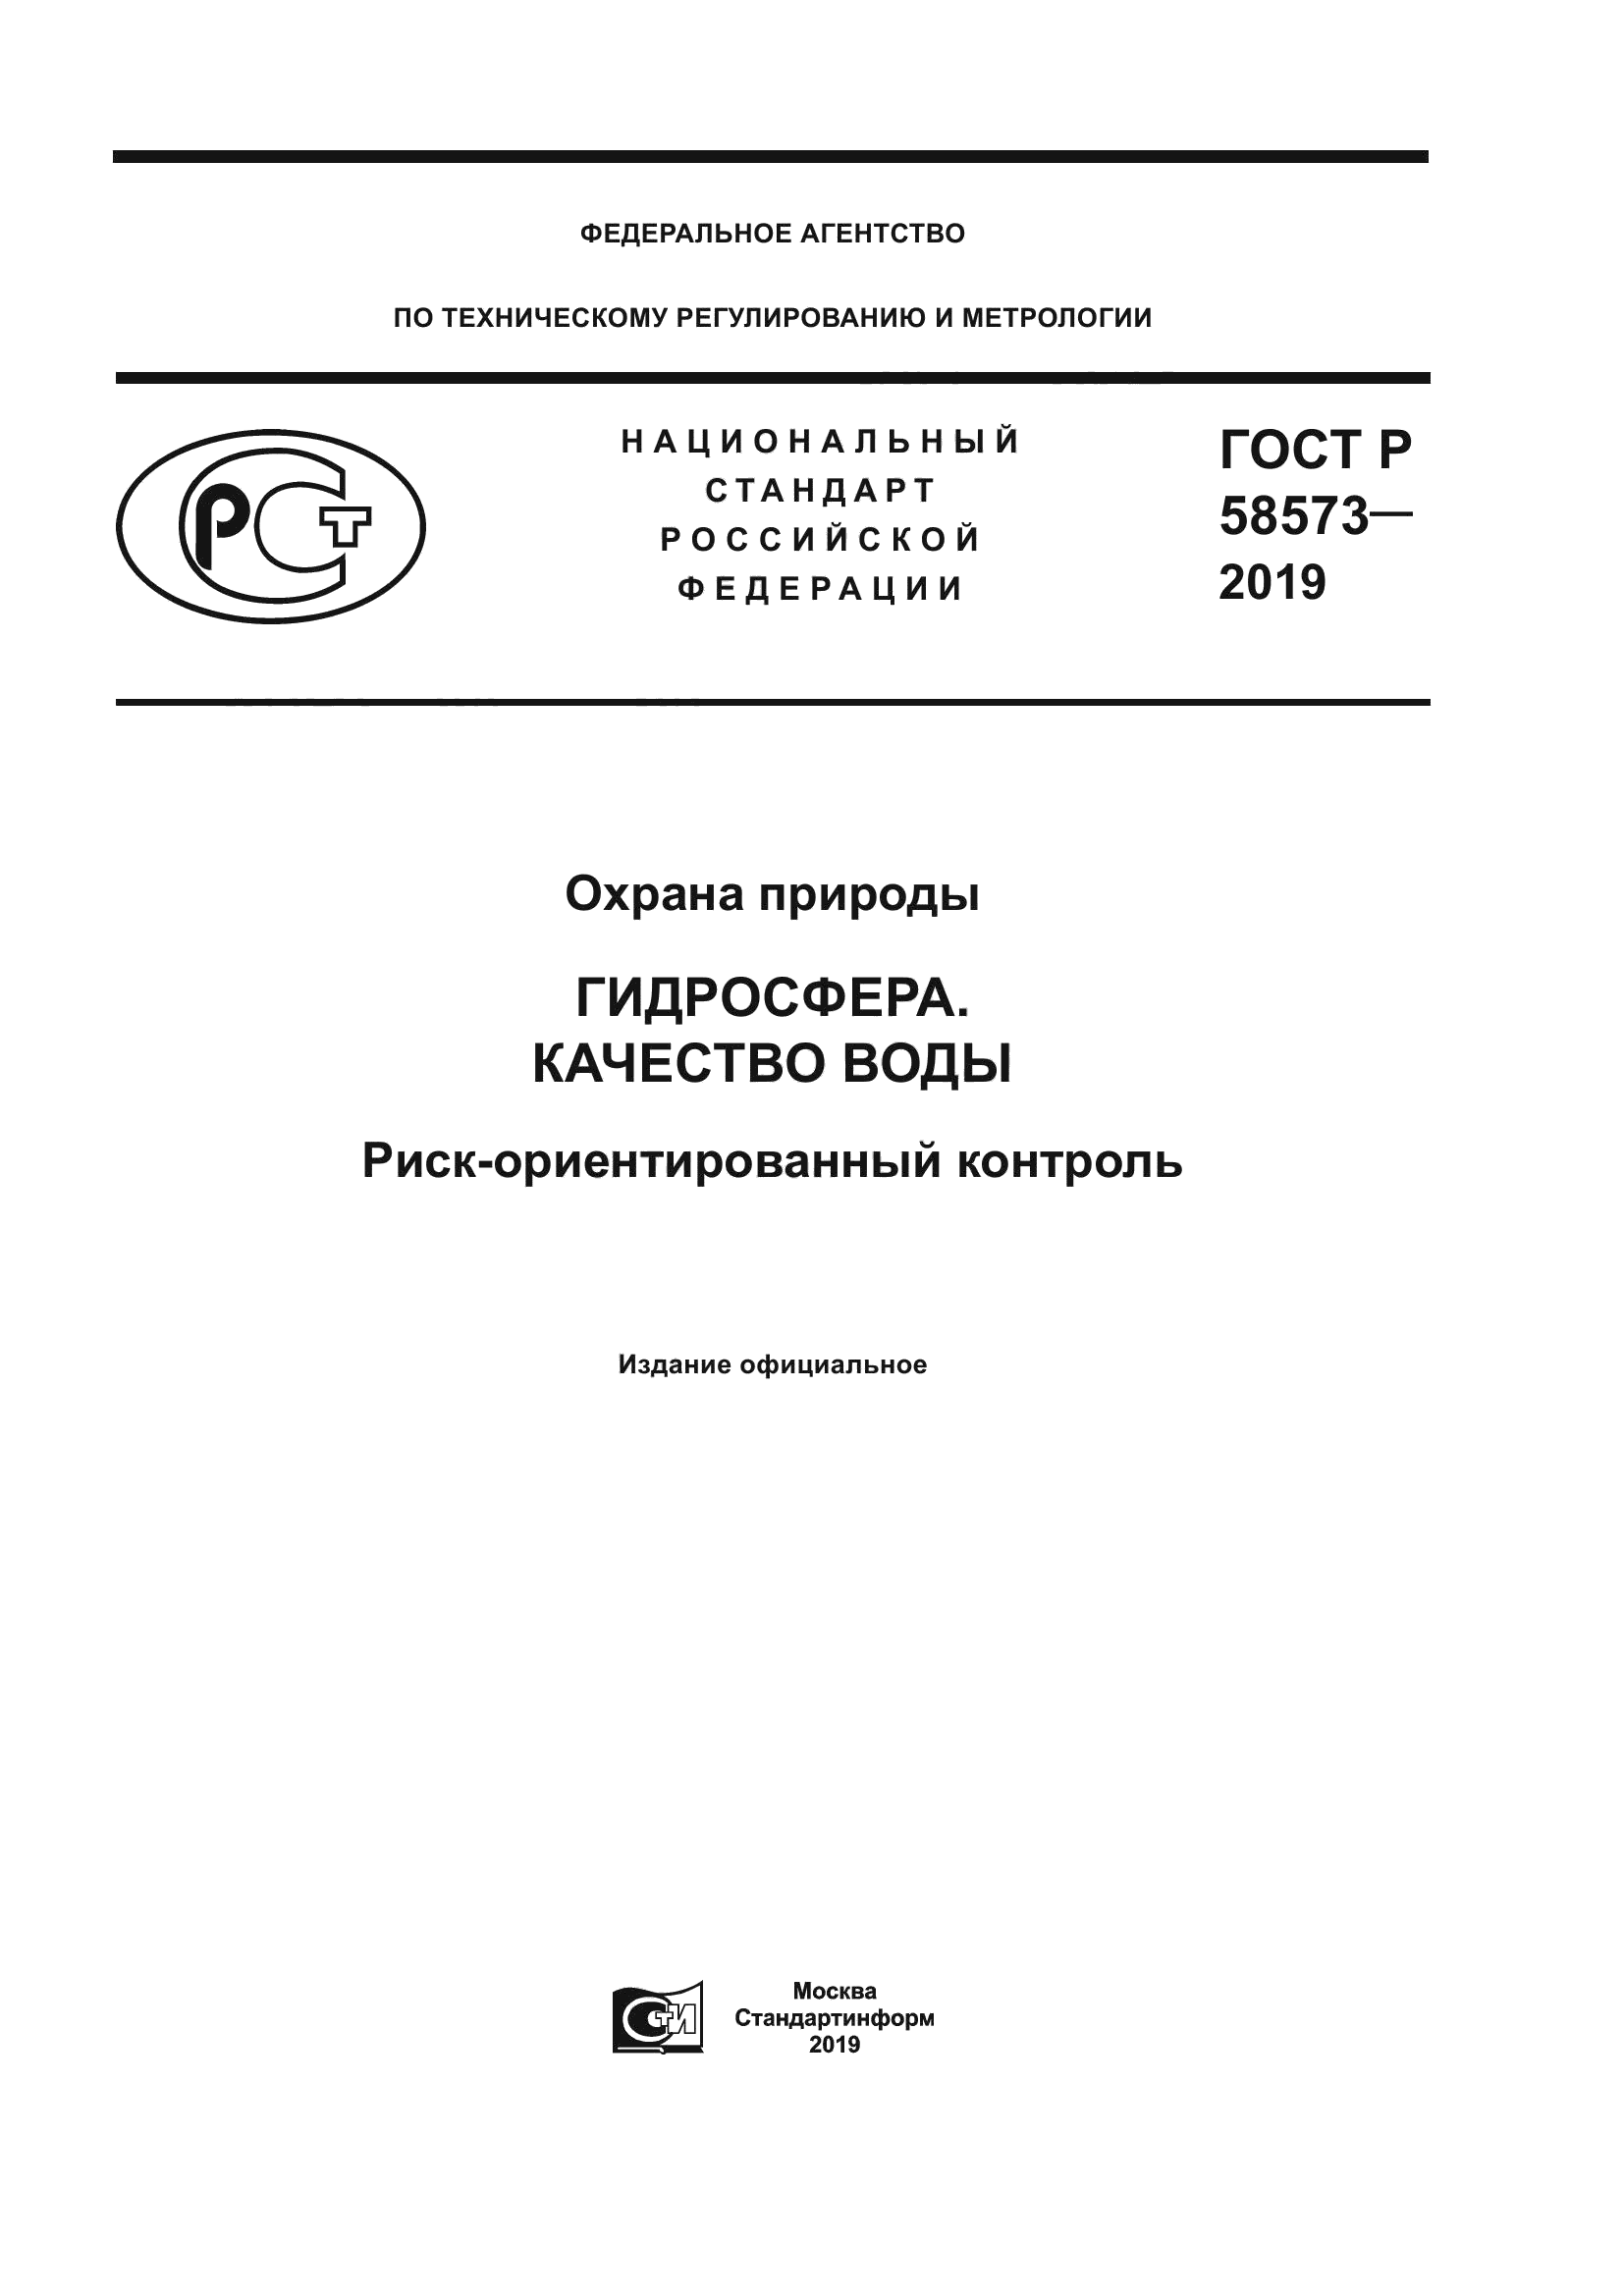 ГОСТ Р 58573-2019